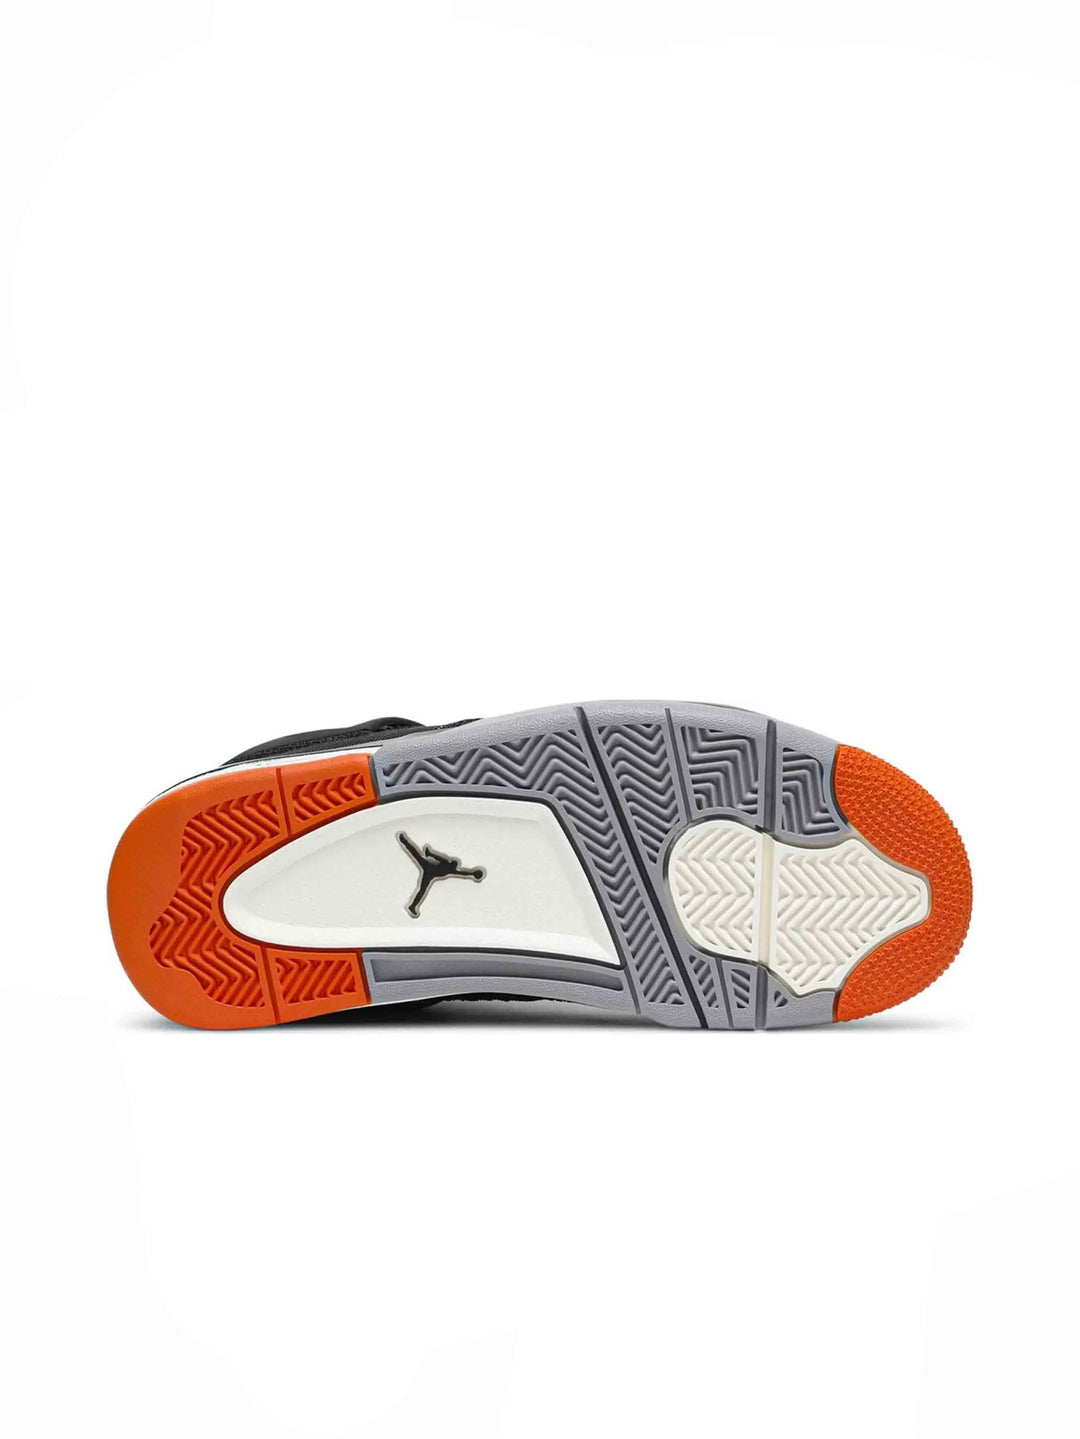 Nike Air Jordan 4 Retro Starfish (W) in Auckland, New Zealand - Shop name